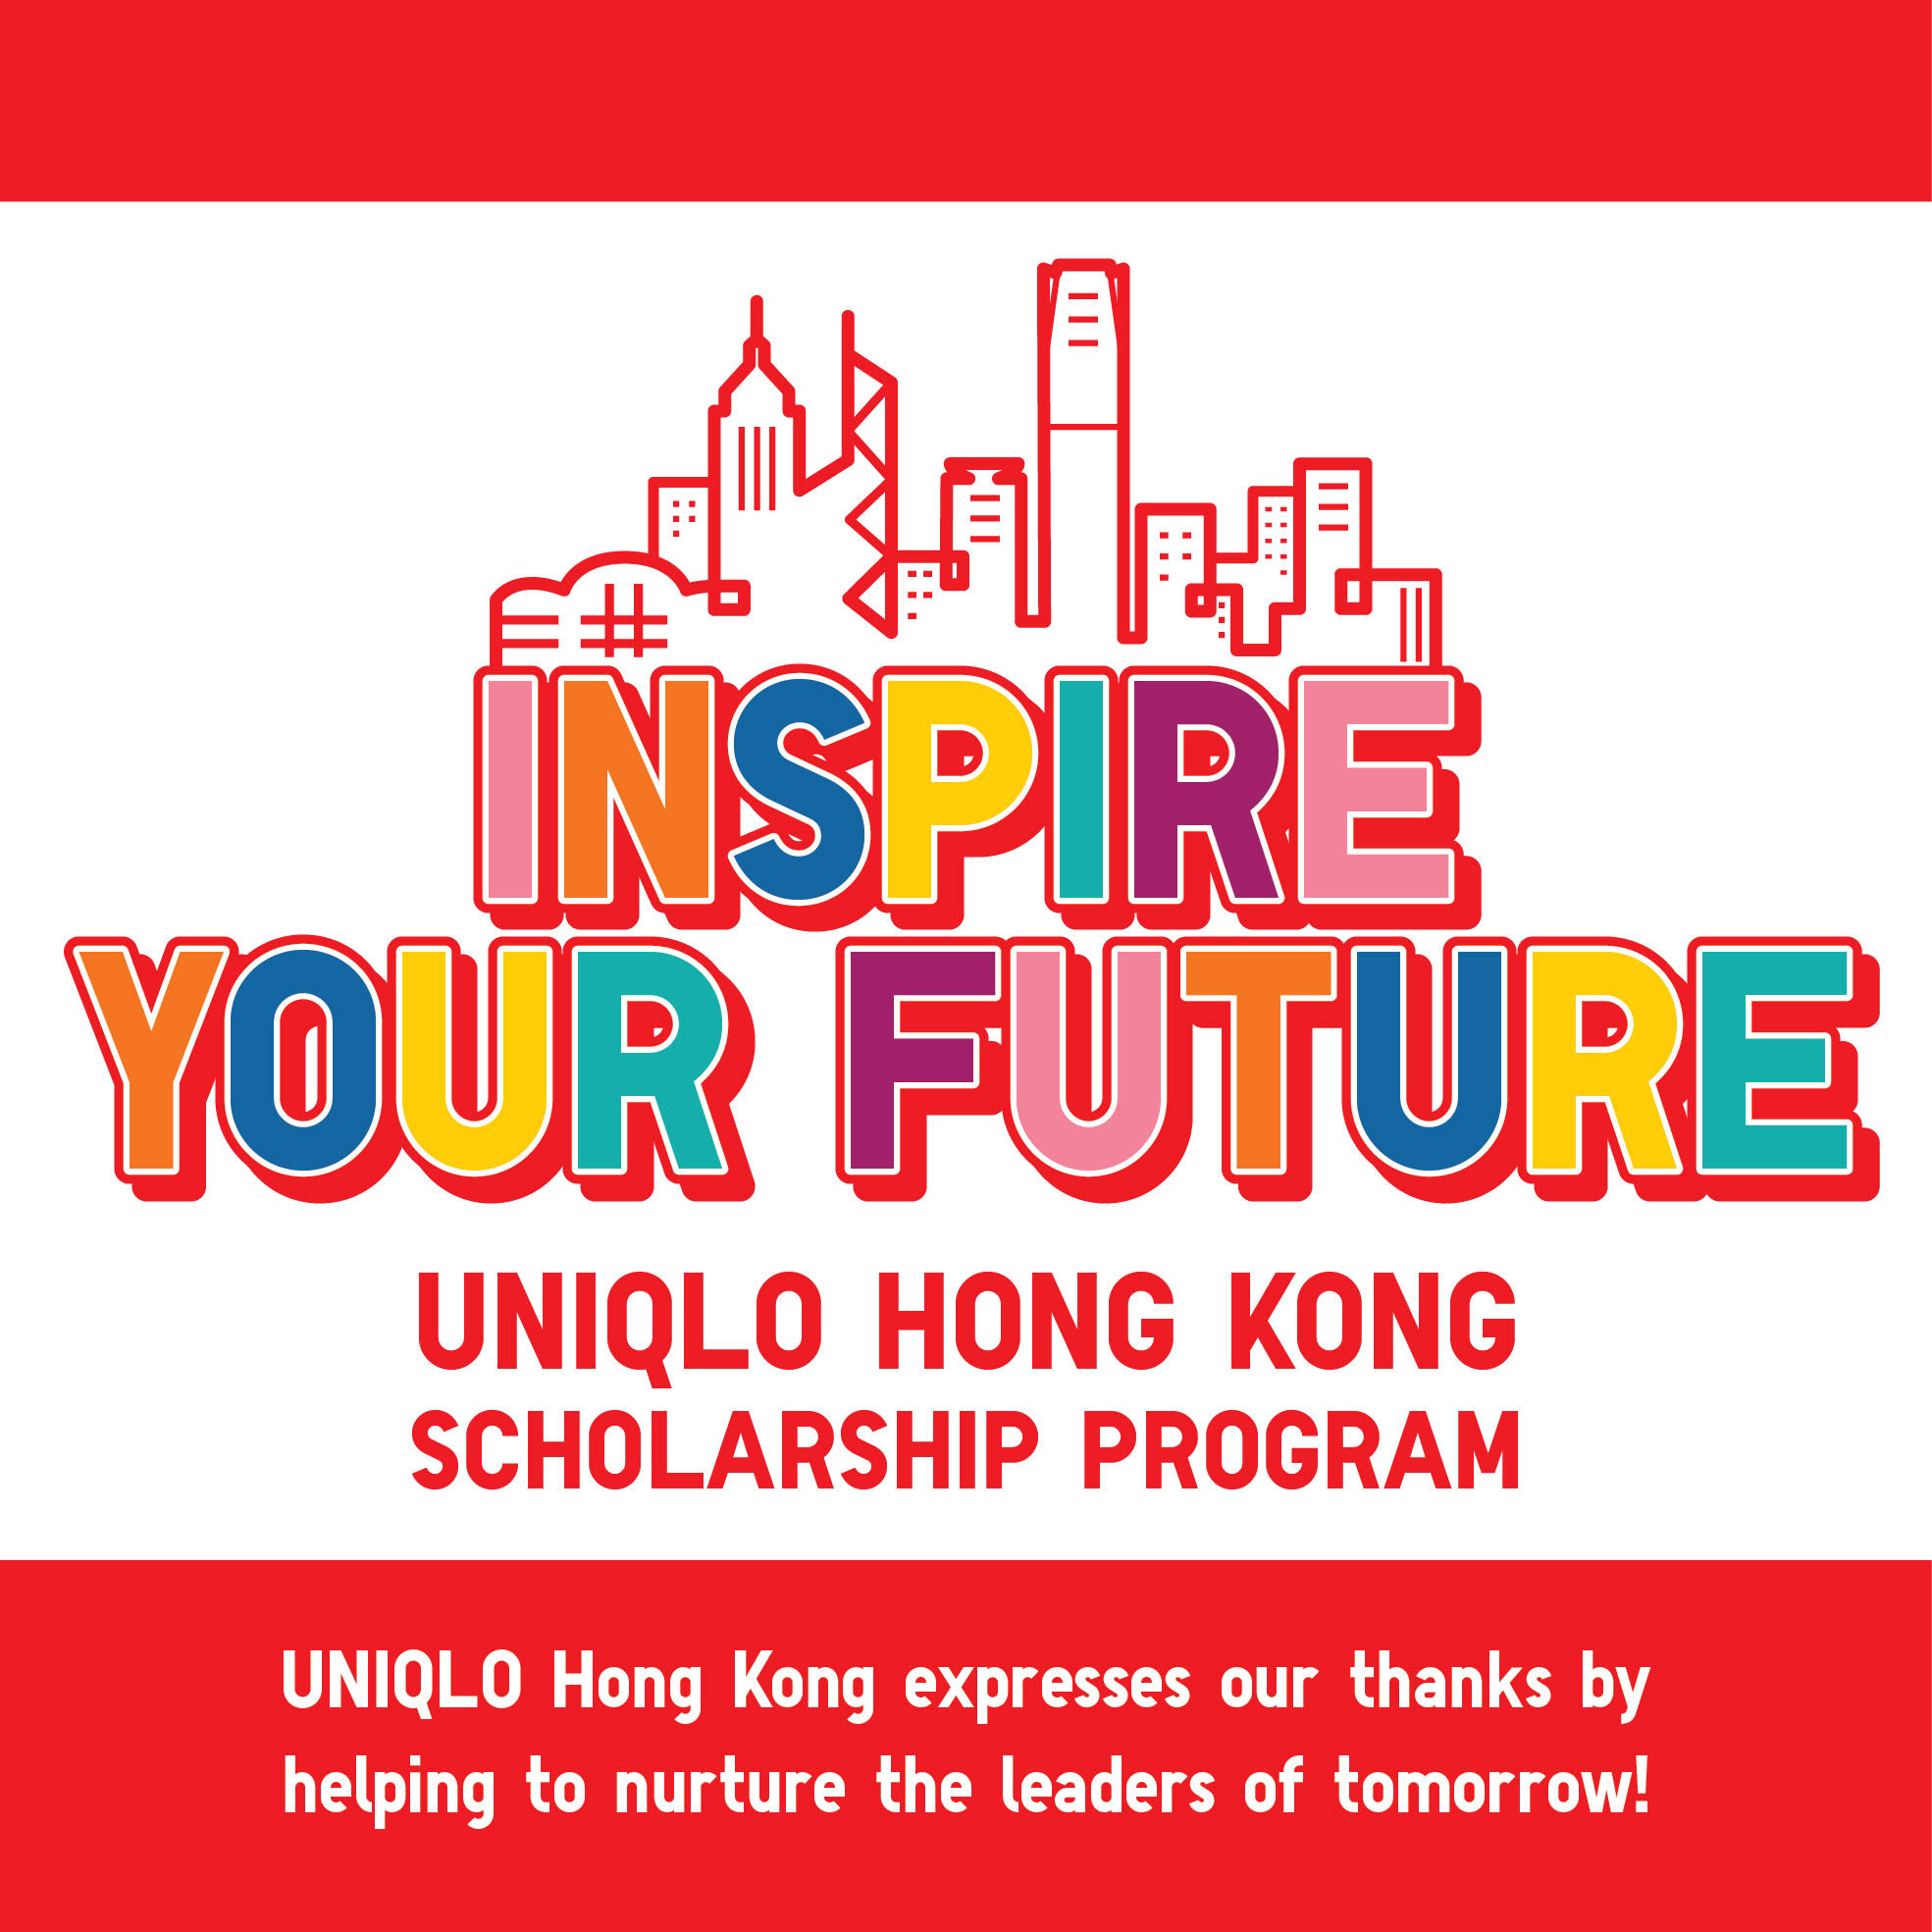 UNIQLO Hong Kong Scholarship Program